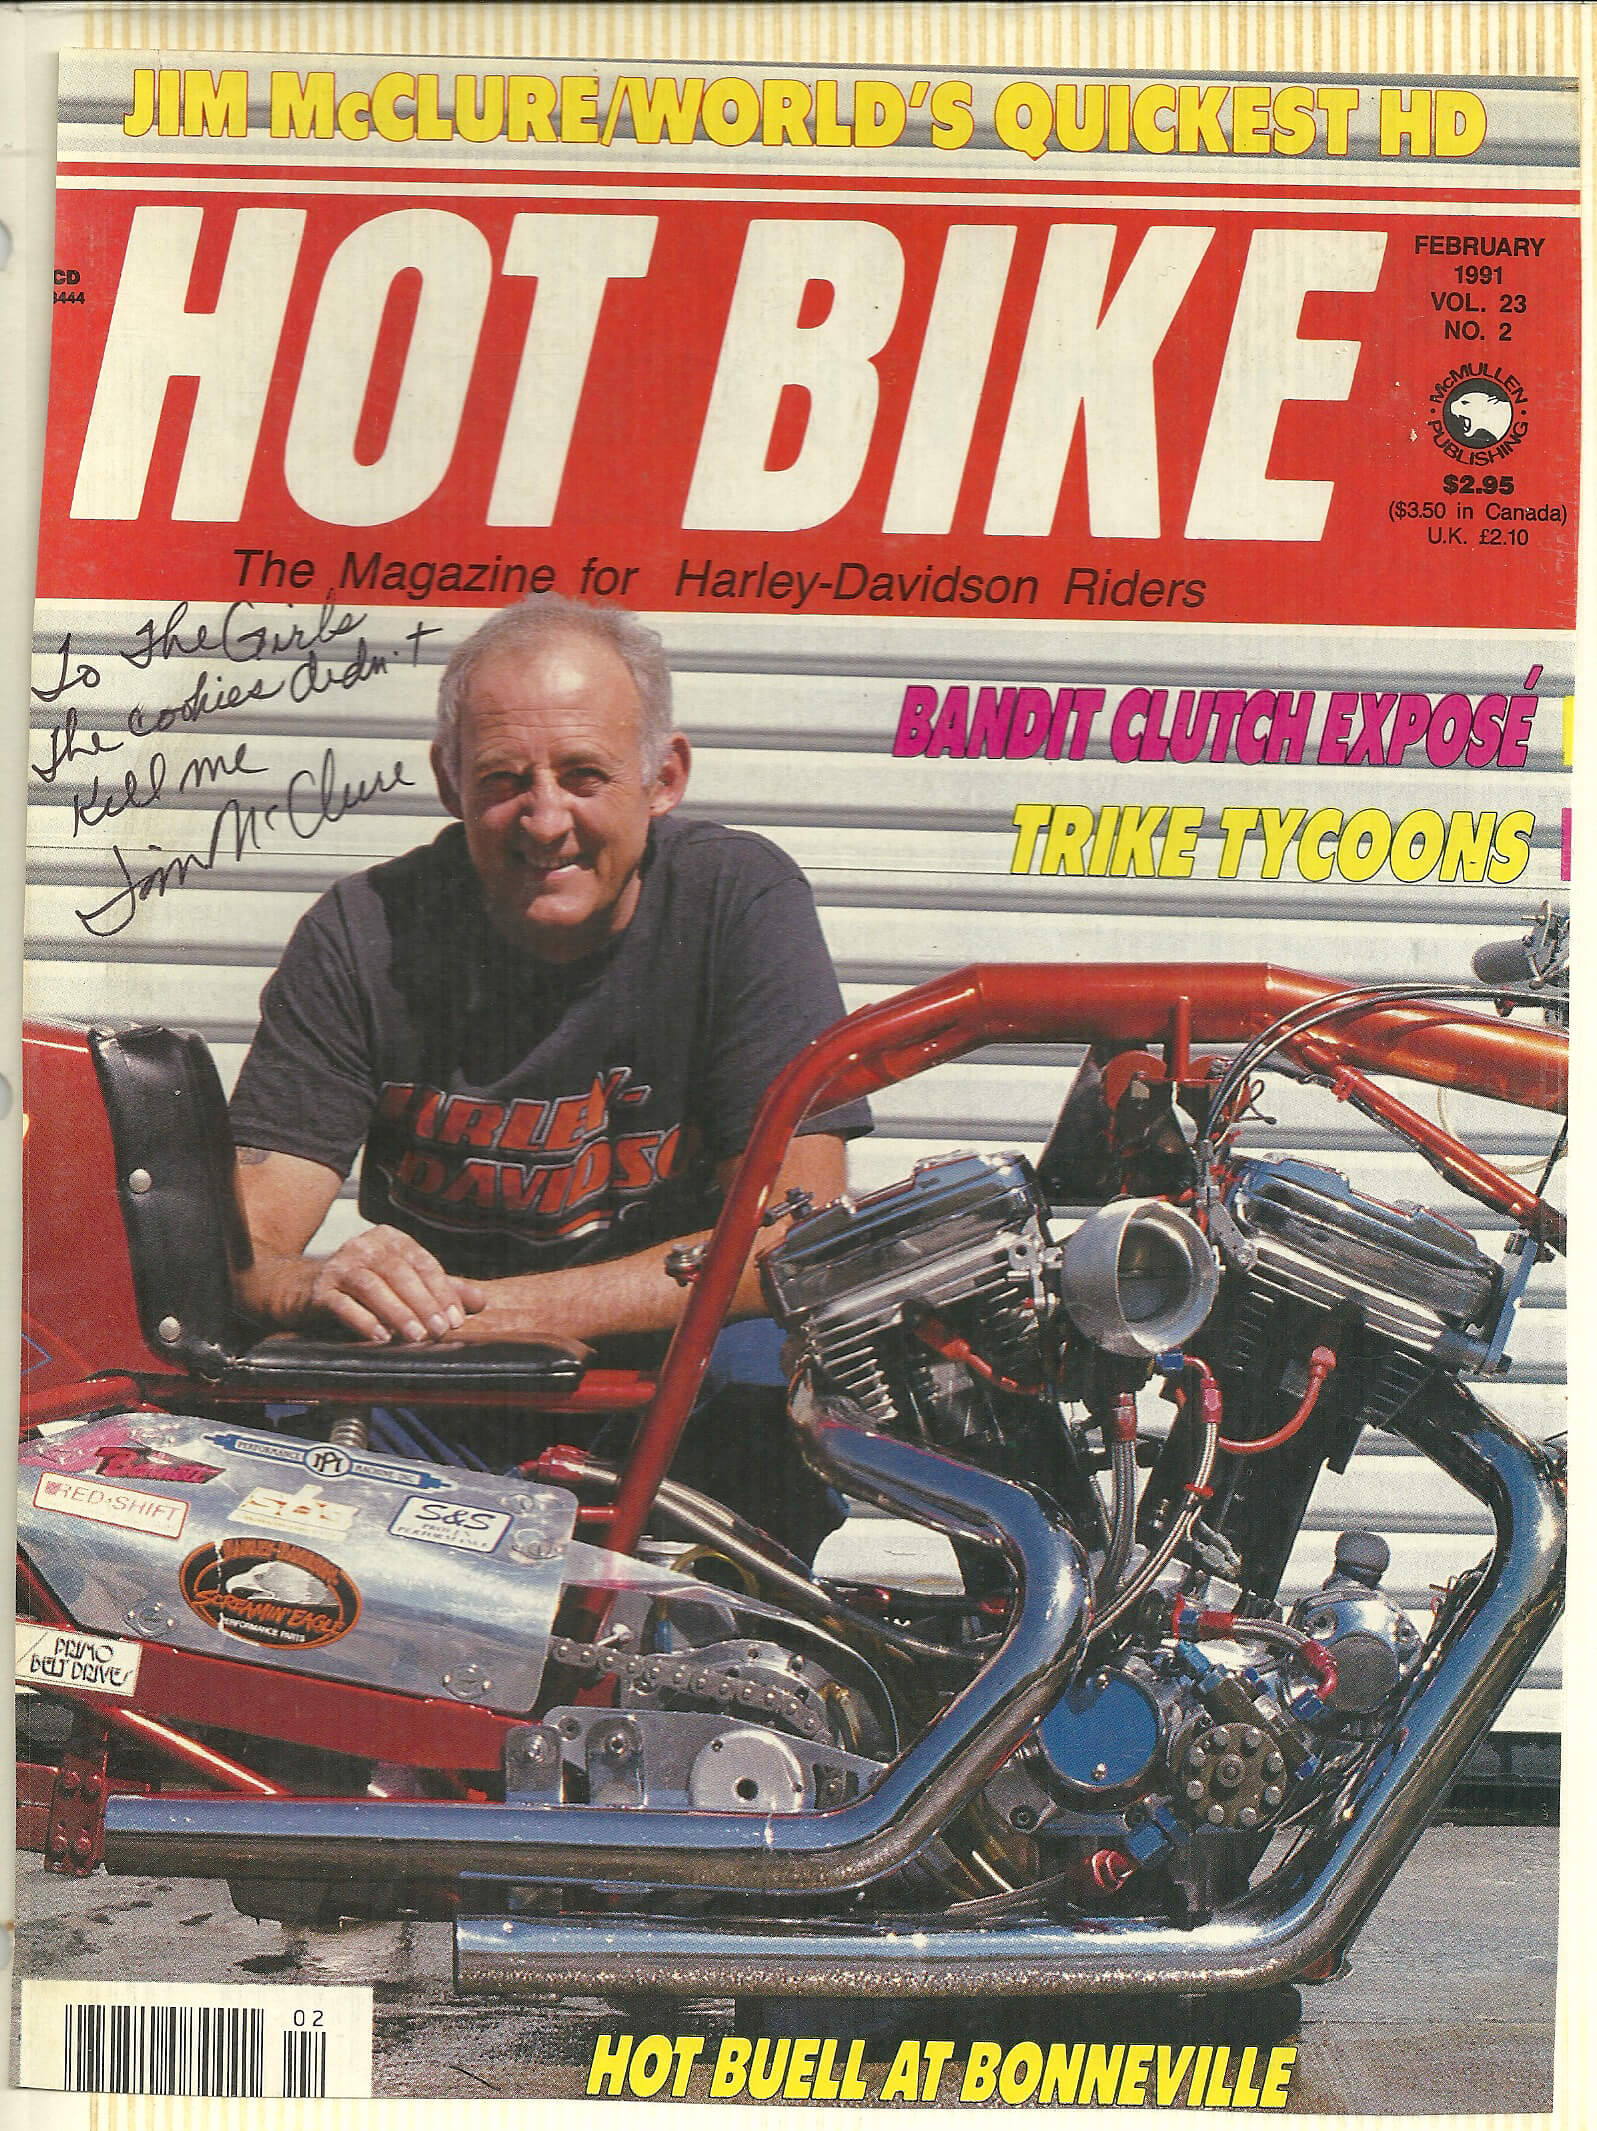 Jim Hot Bike